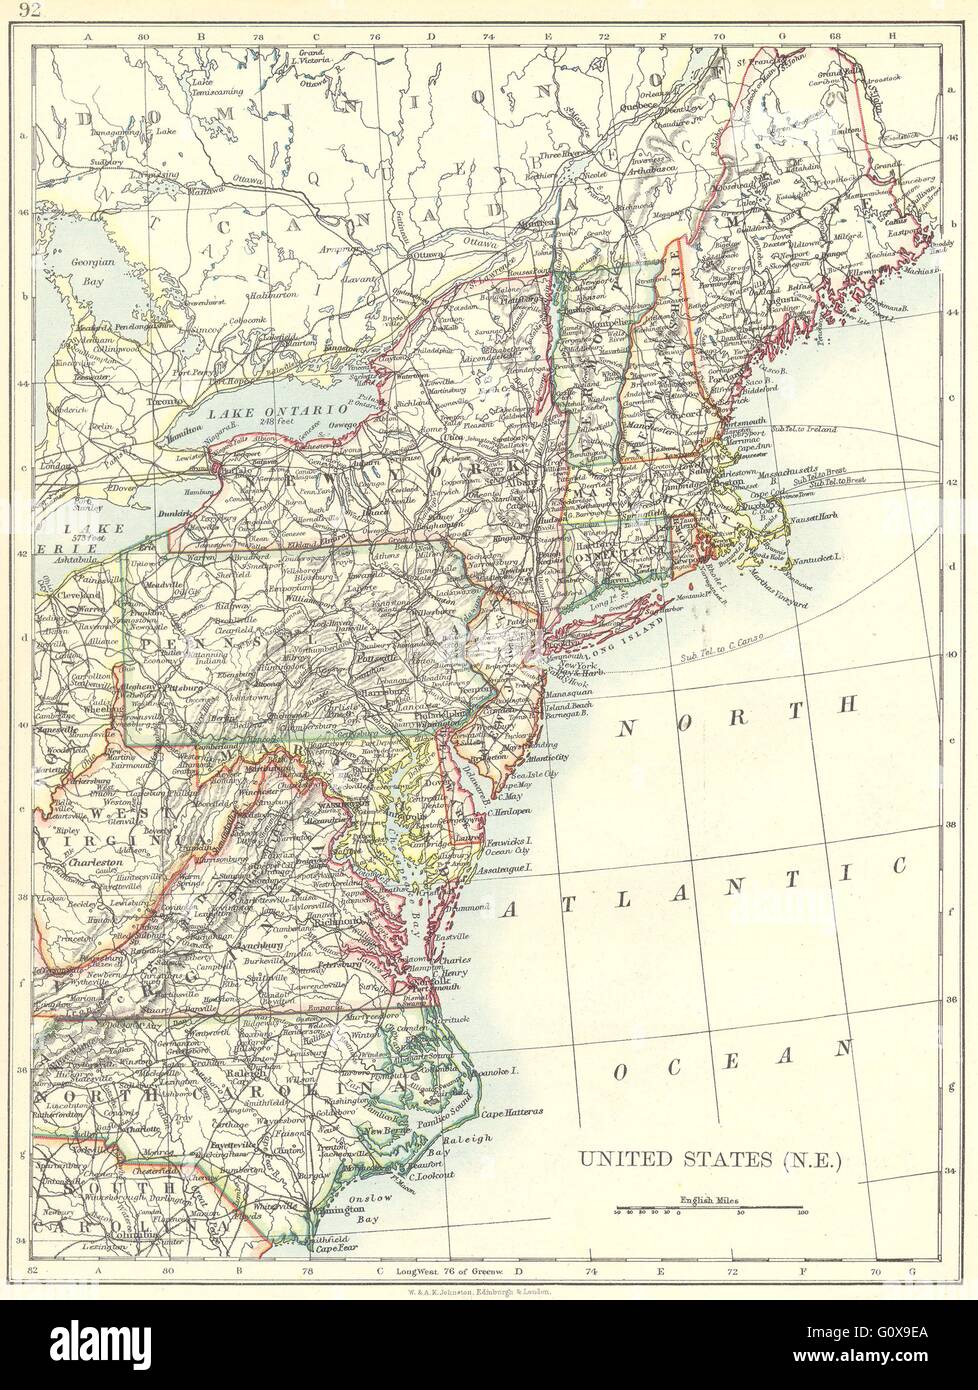 Stati Uniti: Nord Est: ME NH VT MA NY NJ CT RI NC WV VA DE MD, 1897 Mappa Foto Stock